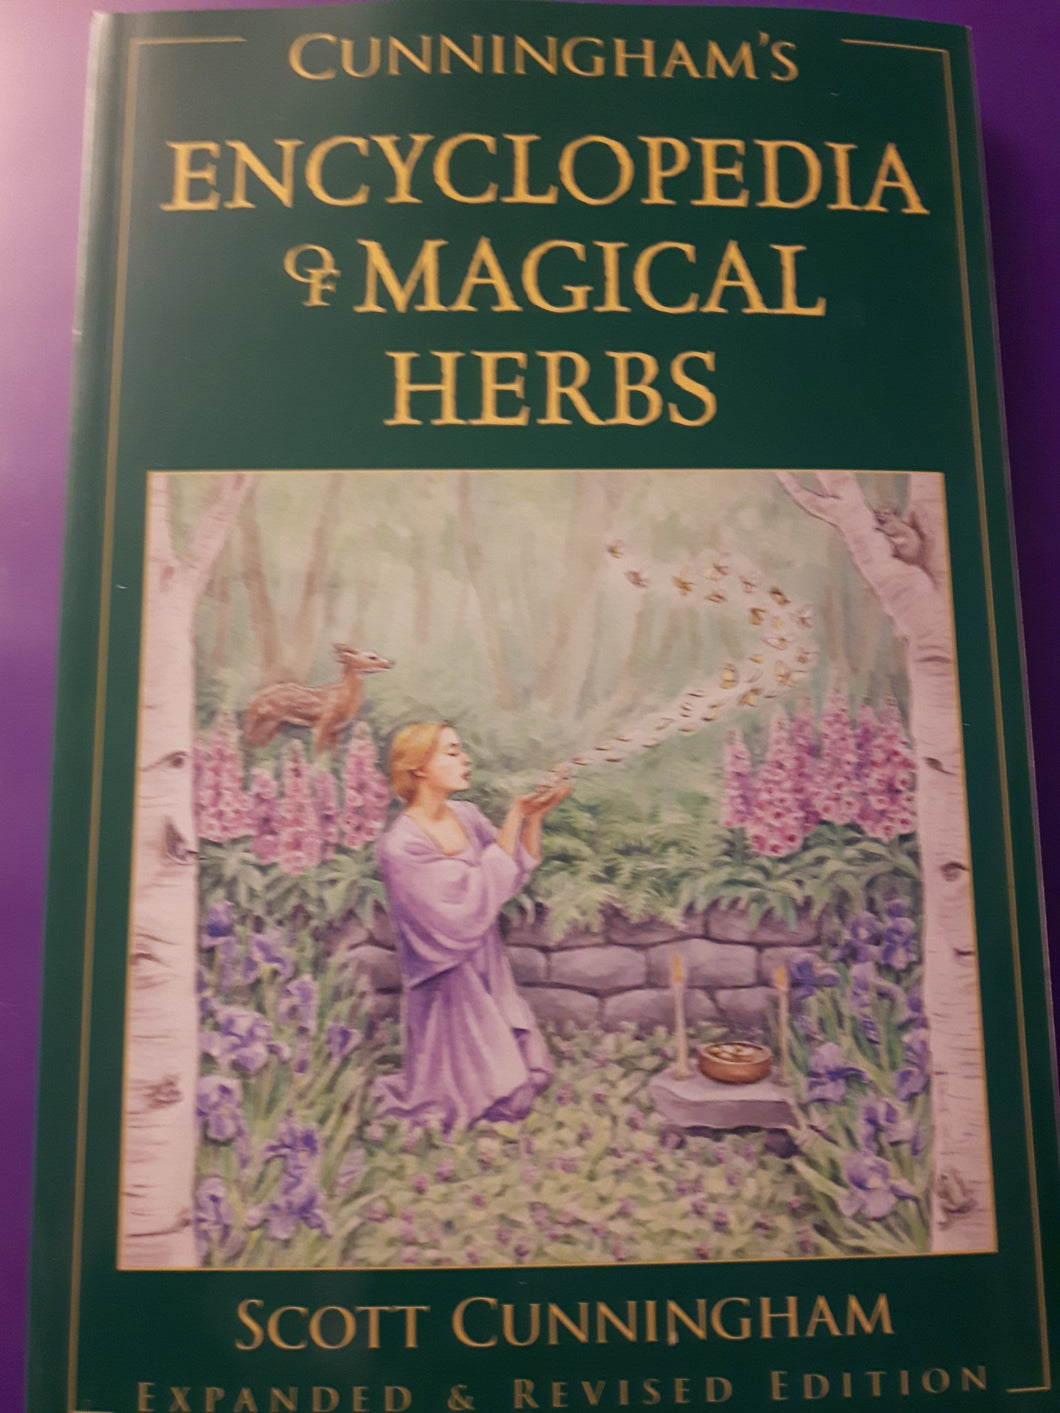 Encyclopedia of Magickal Herbs